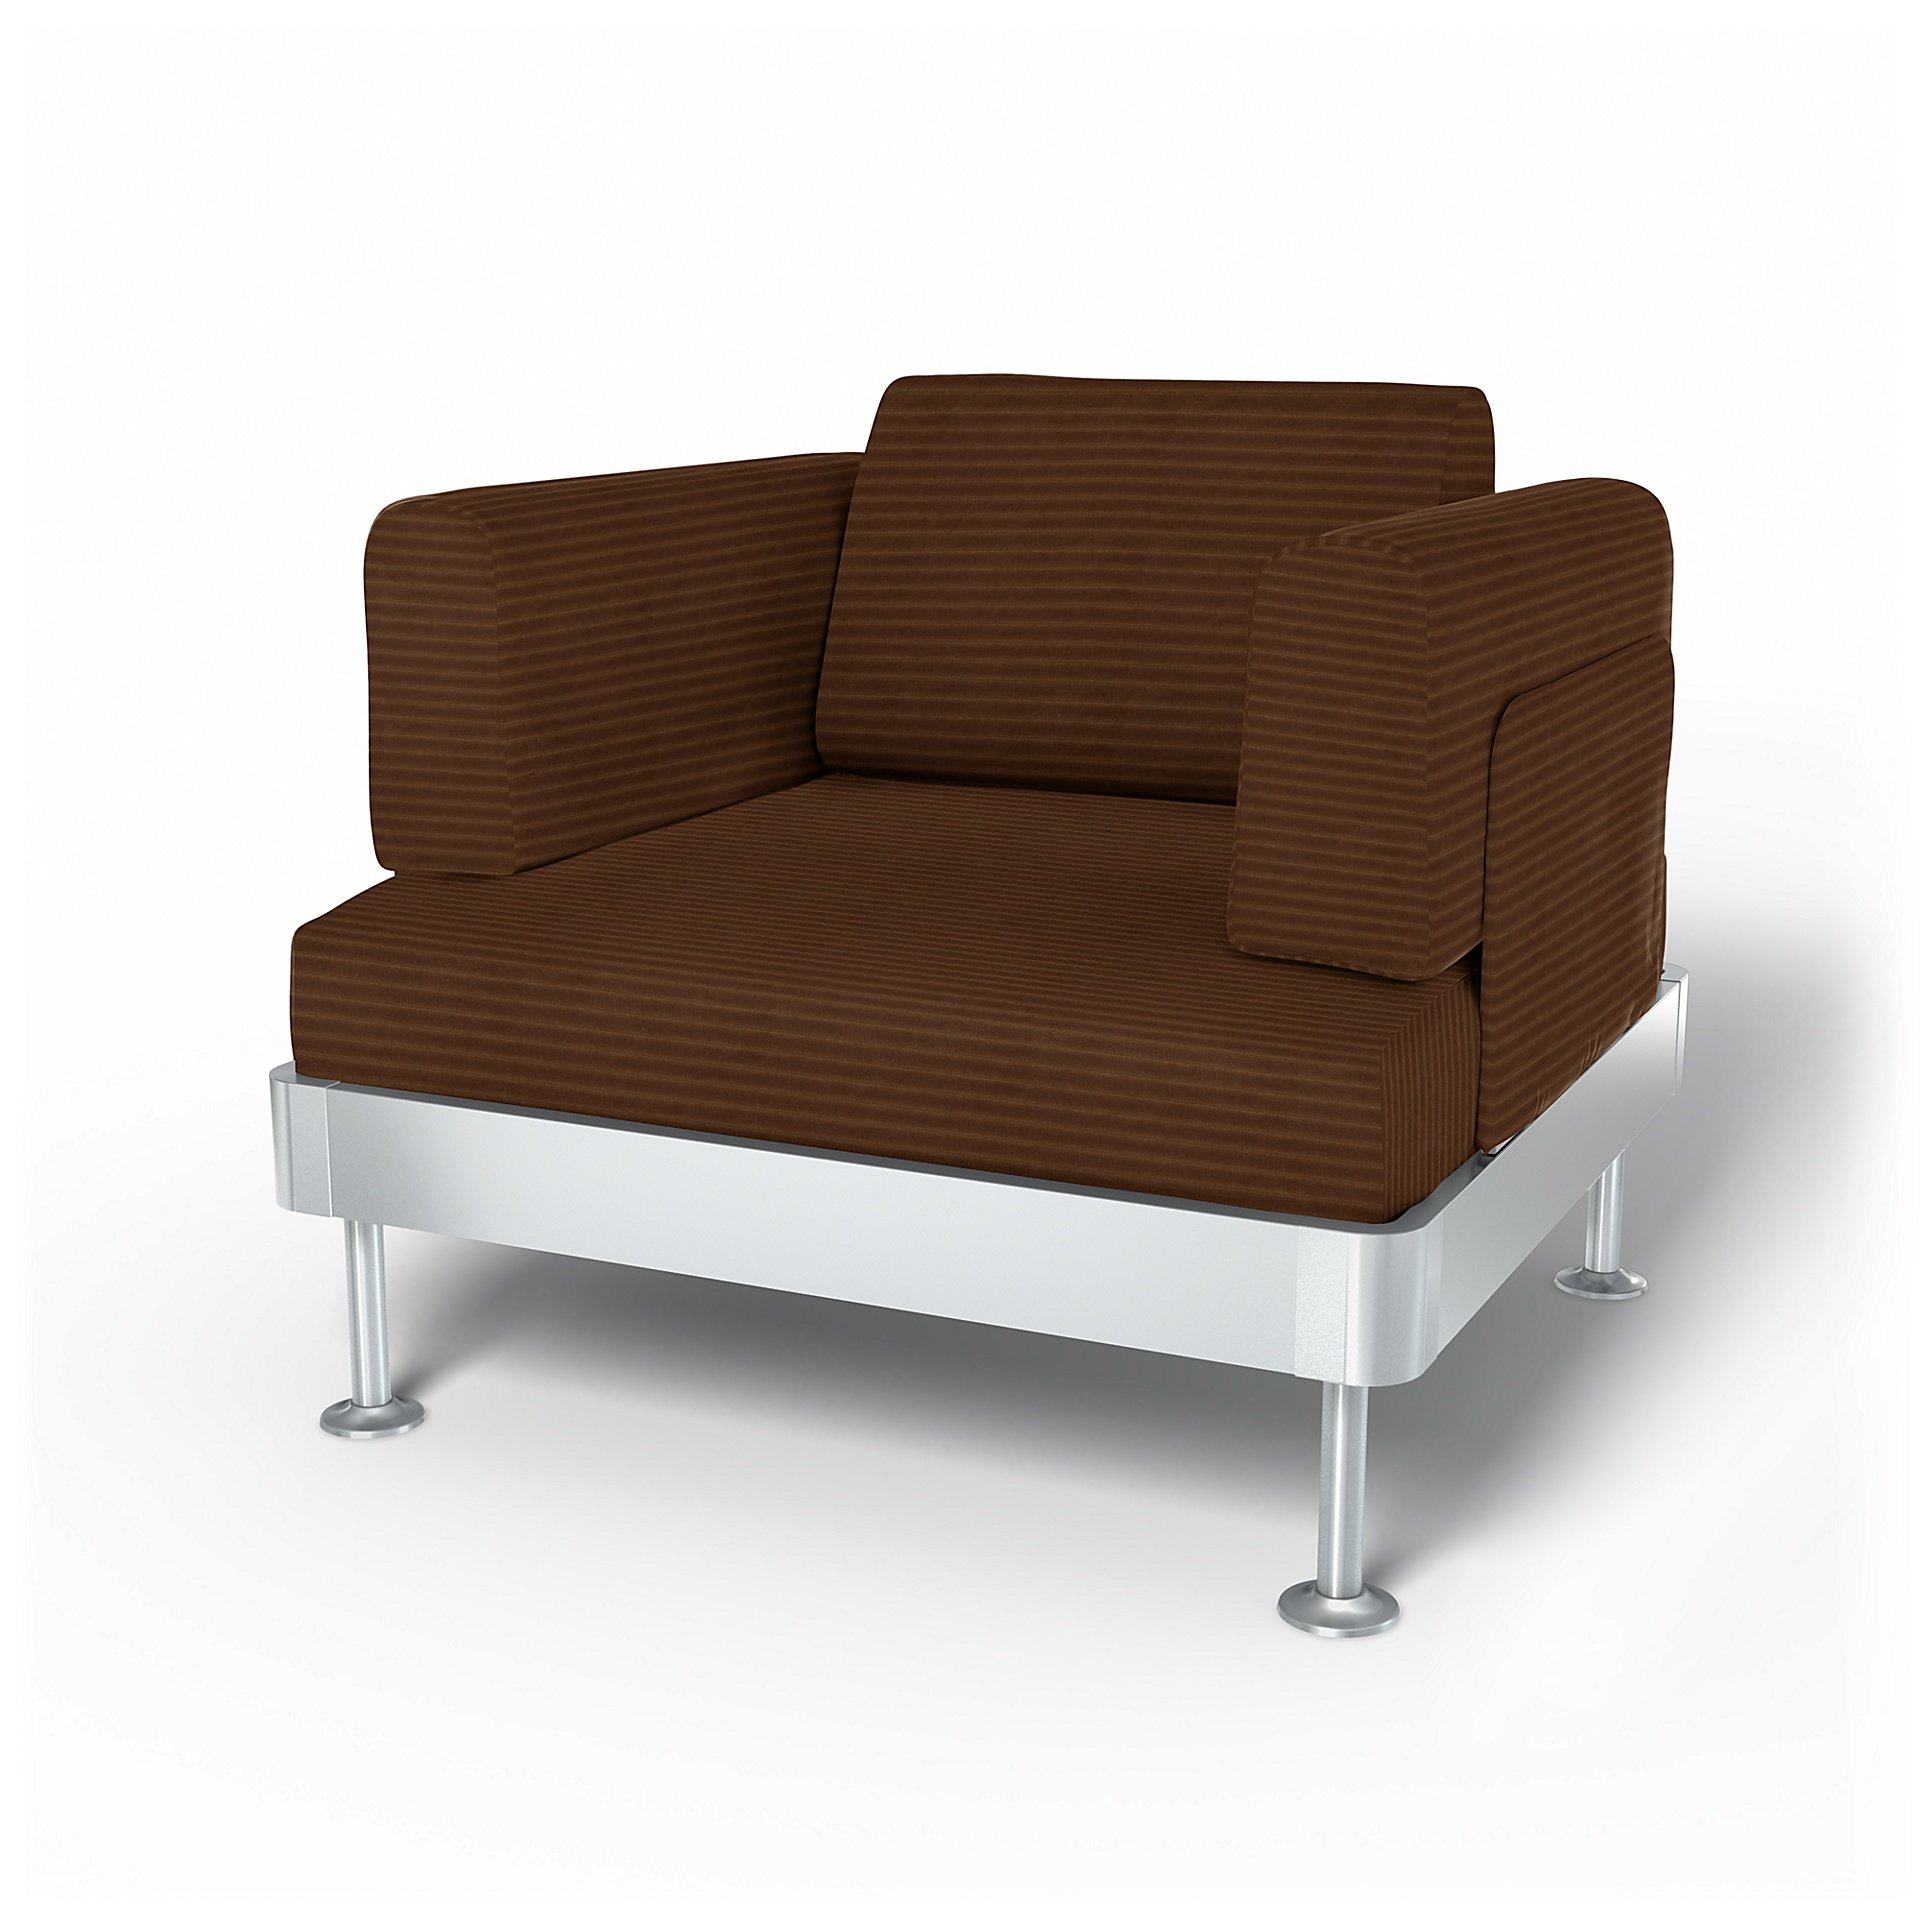 IKEA - Delaktig Armchair Cover, Chocolate Brown, Corduroy - Bemz